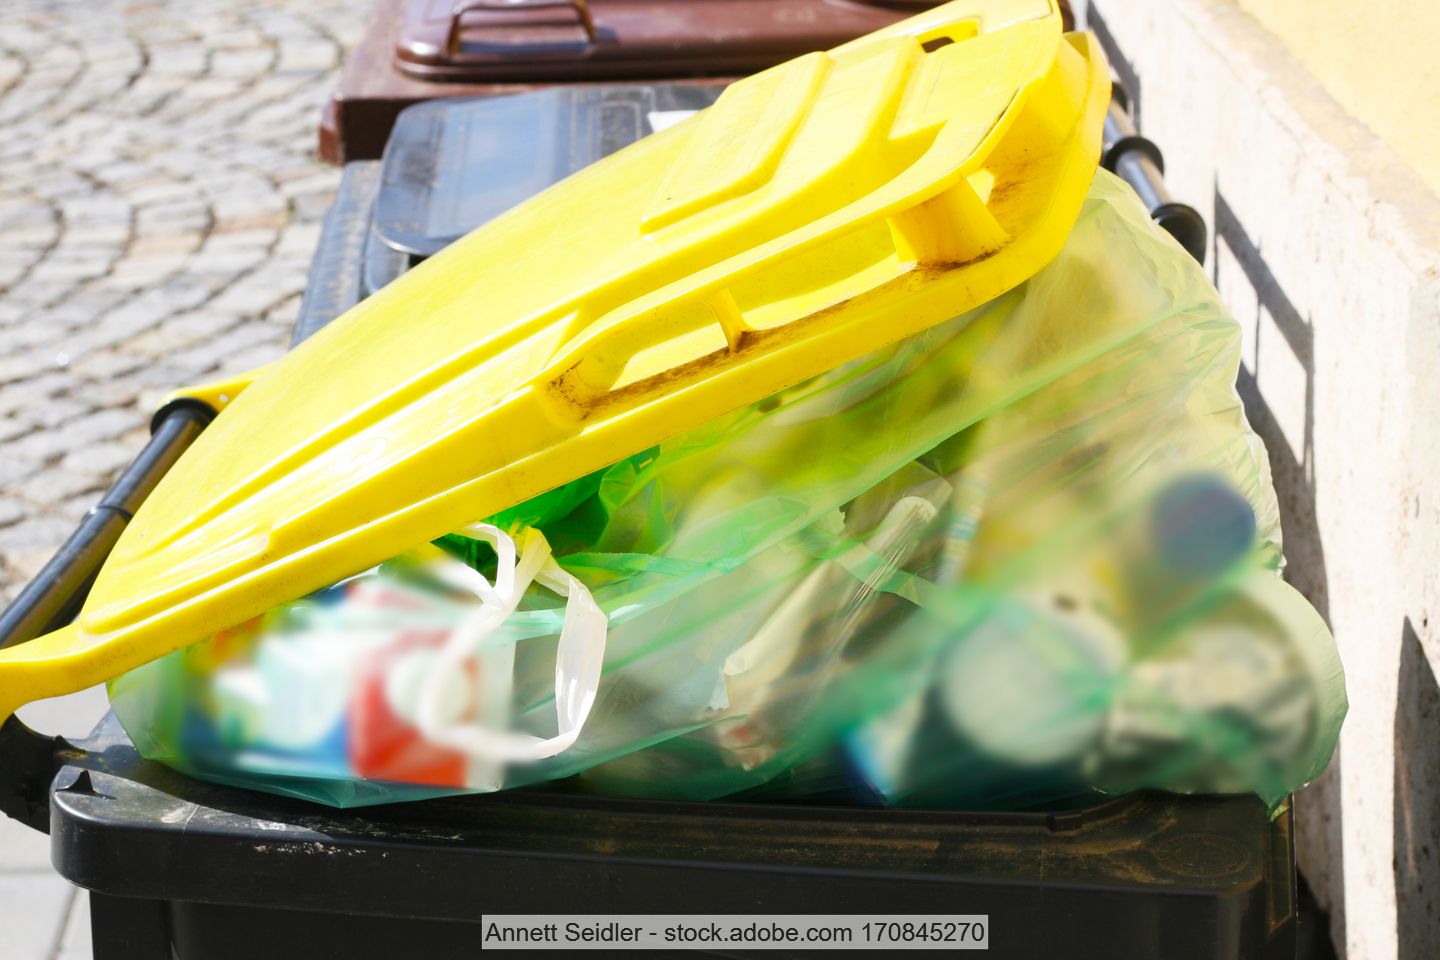 Yellow packaging waste bin overflows